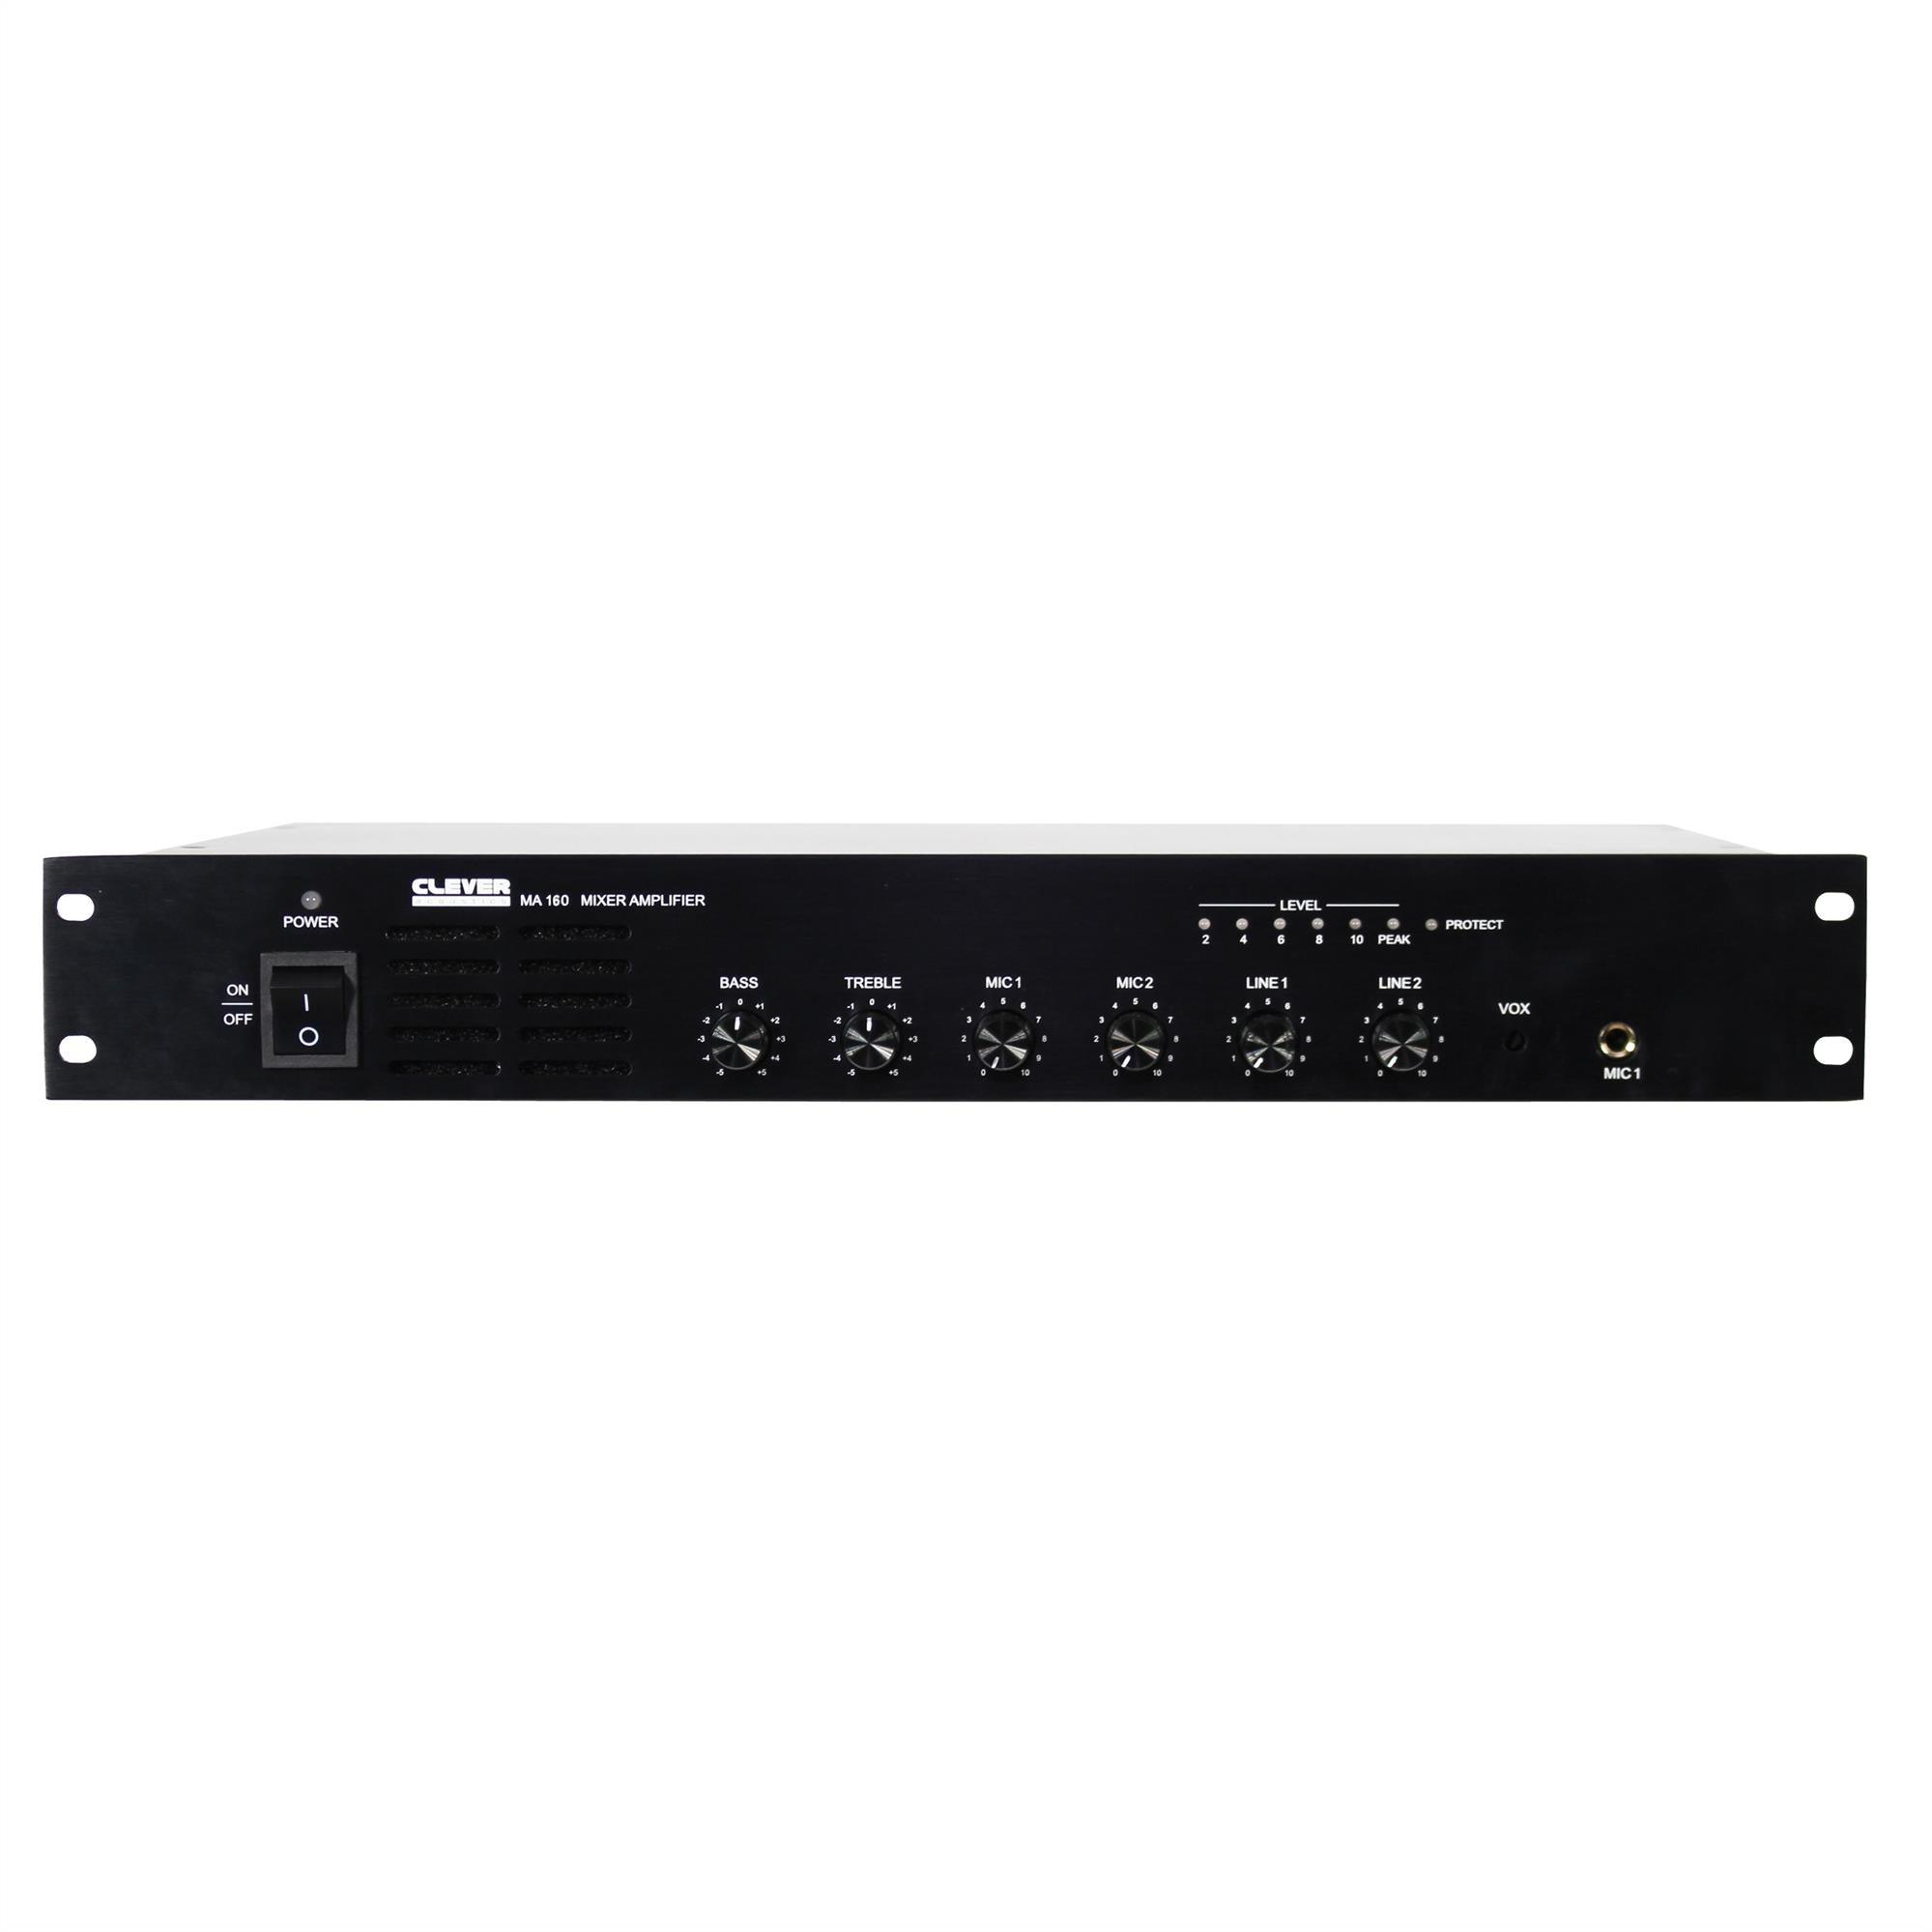 Clever Acoustics MA 160 100v 60w Mixer Amplifier - DY Pro Audio